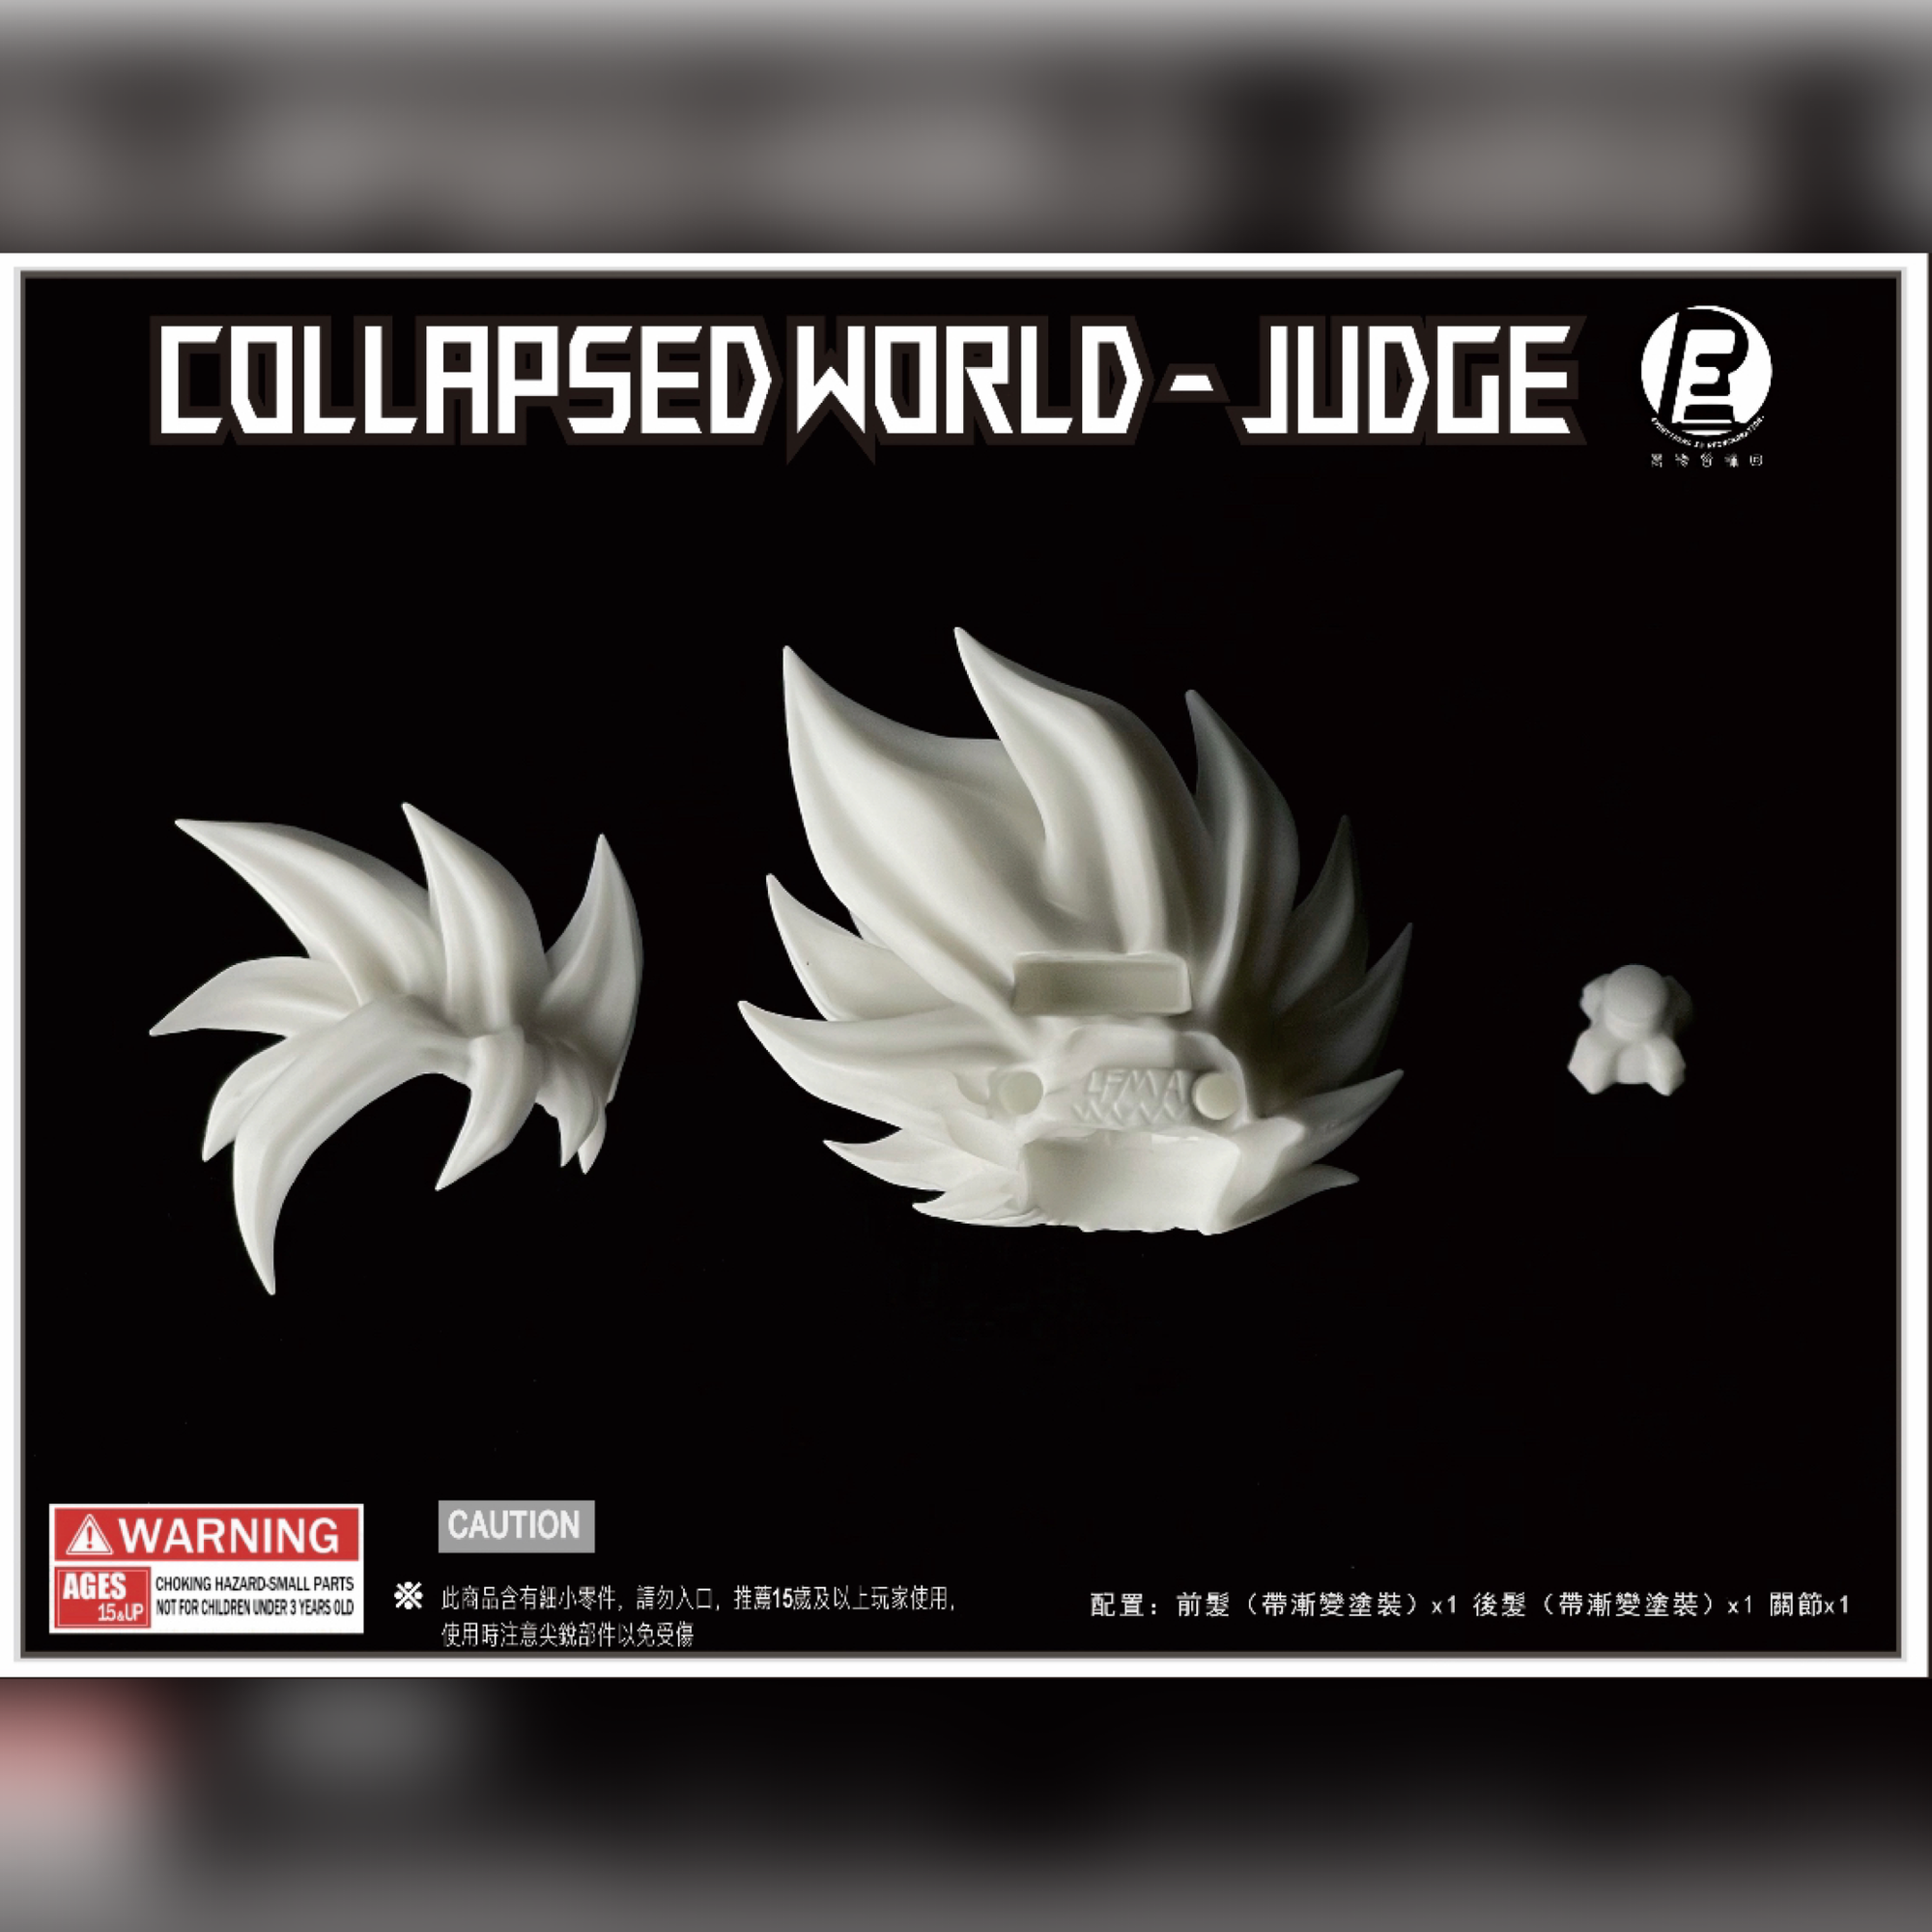 Collapsed World Judge - RECUSTOM